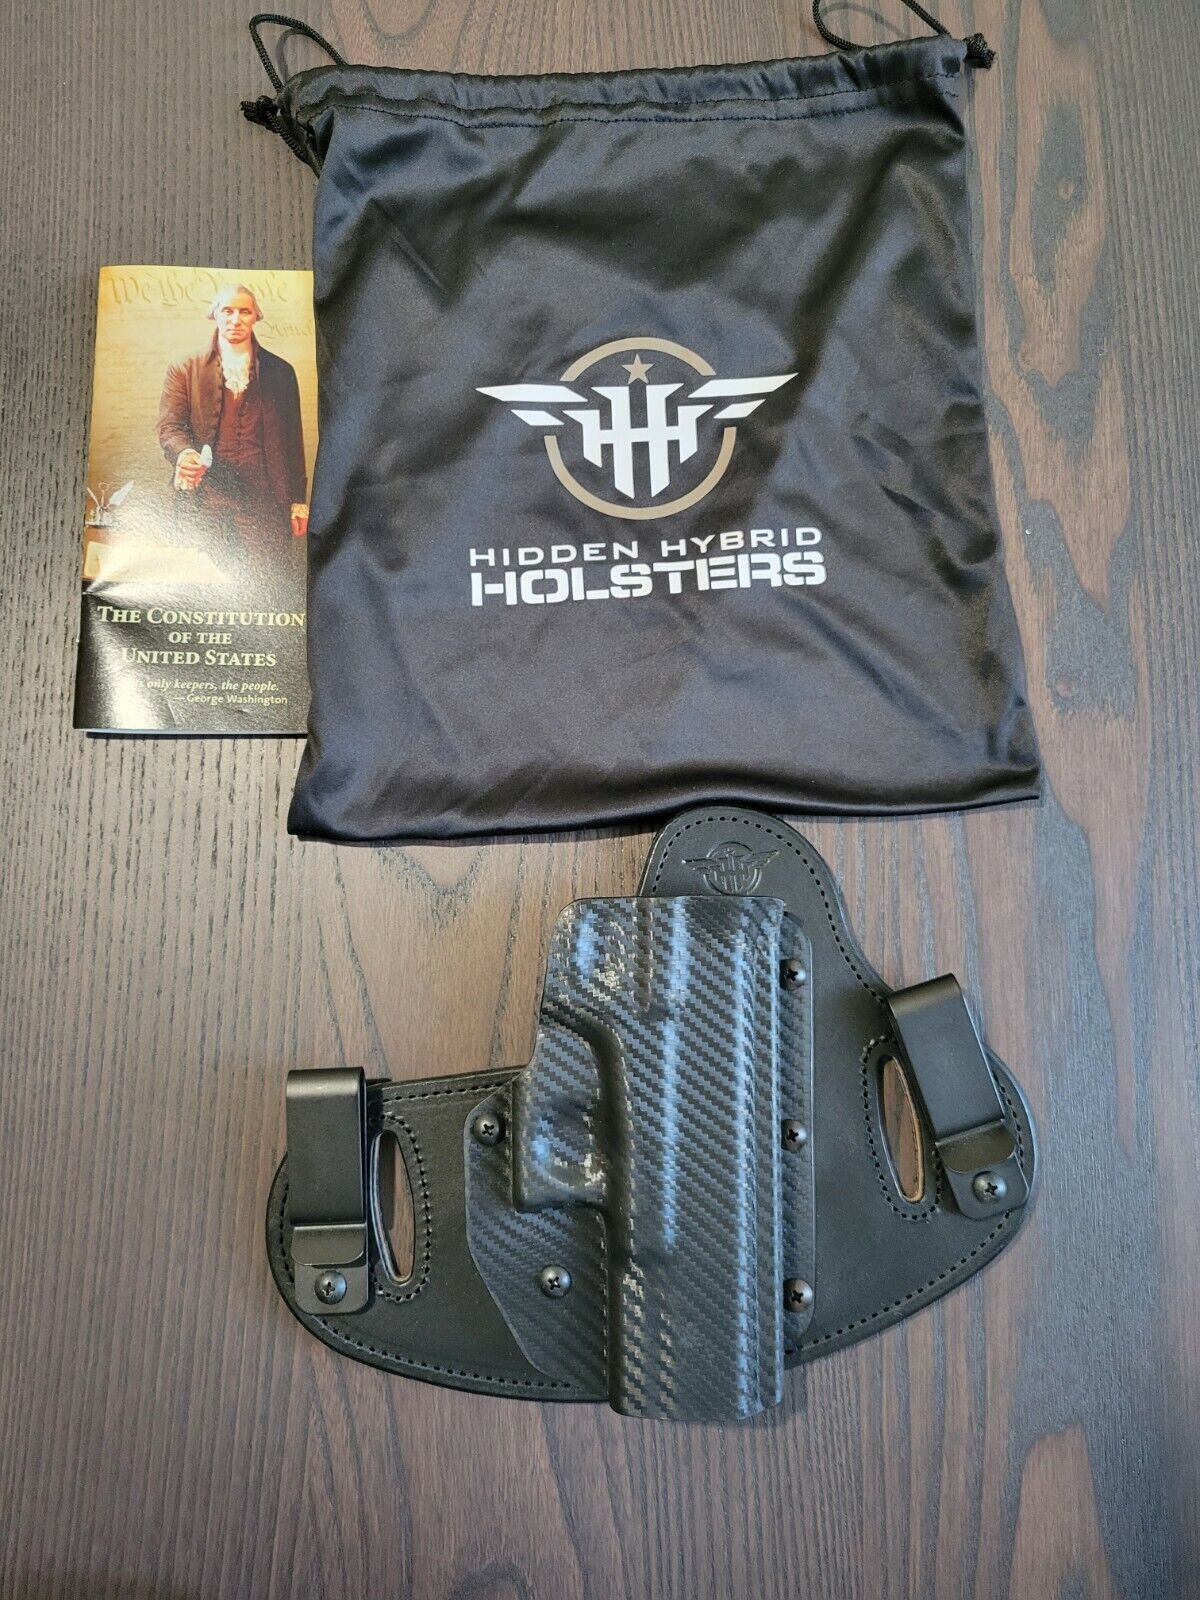 Hidden Hybrid Holster 【一部予約販売中】 Glock 19 19x 23 25 RH - 32 CLIP OWB 38 DOUBLE IWB 人気の贈り物が大集合